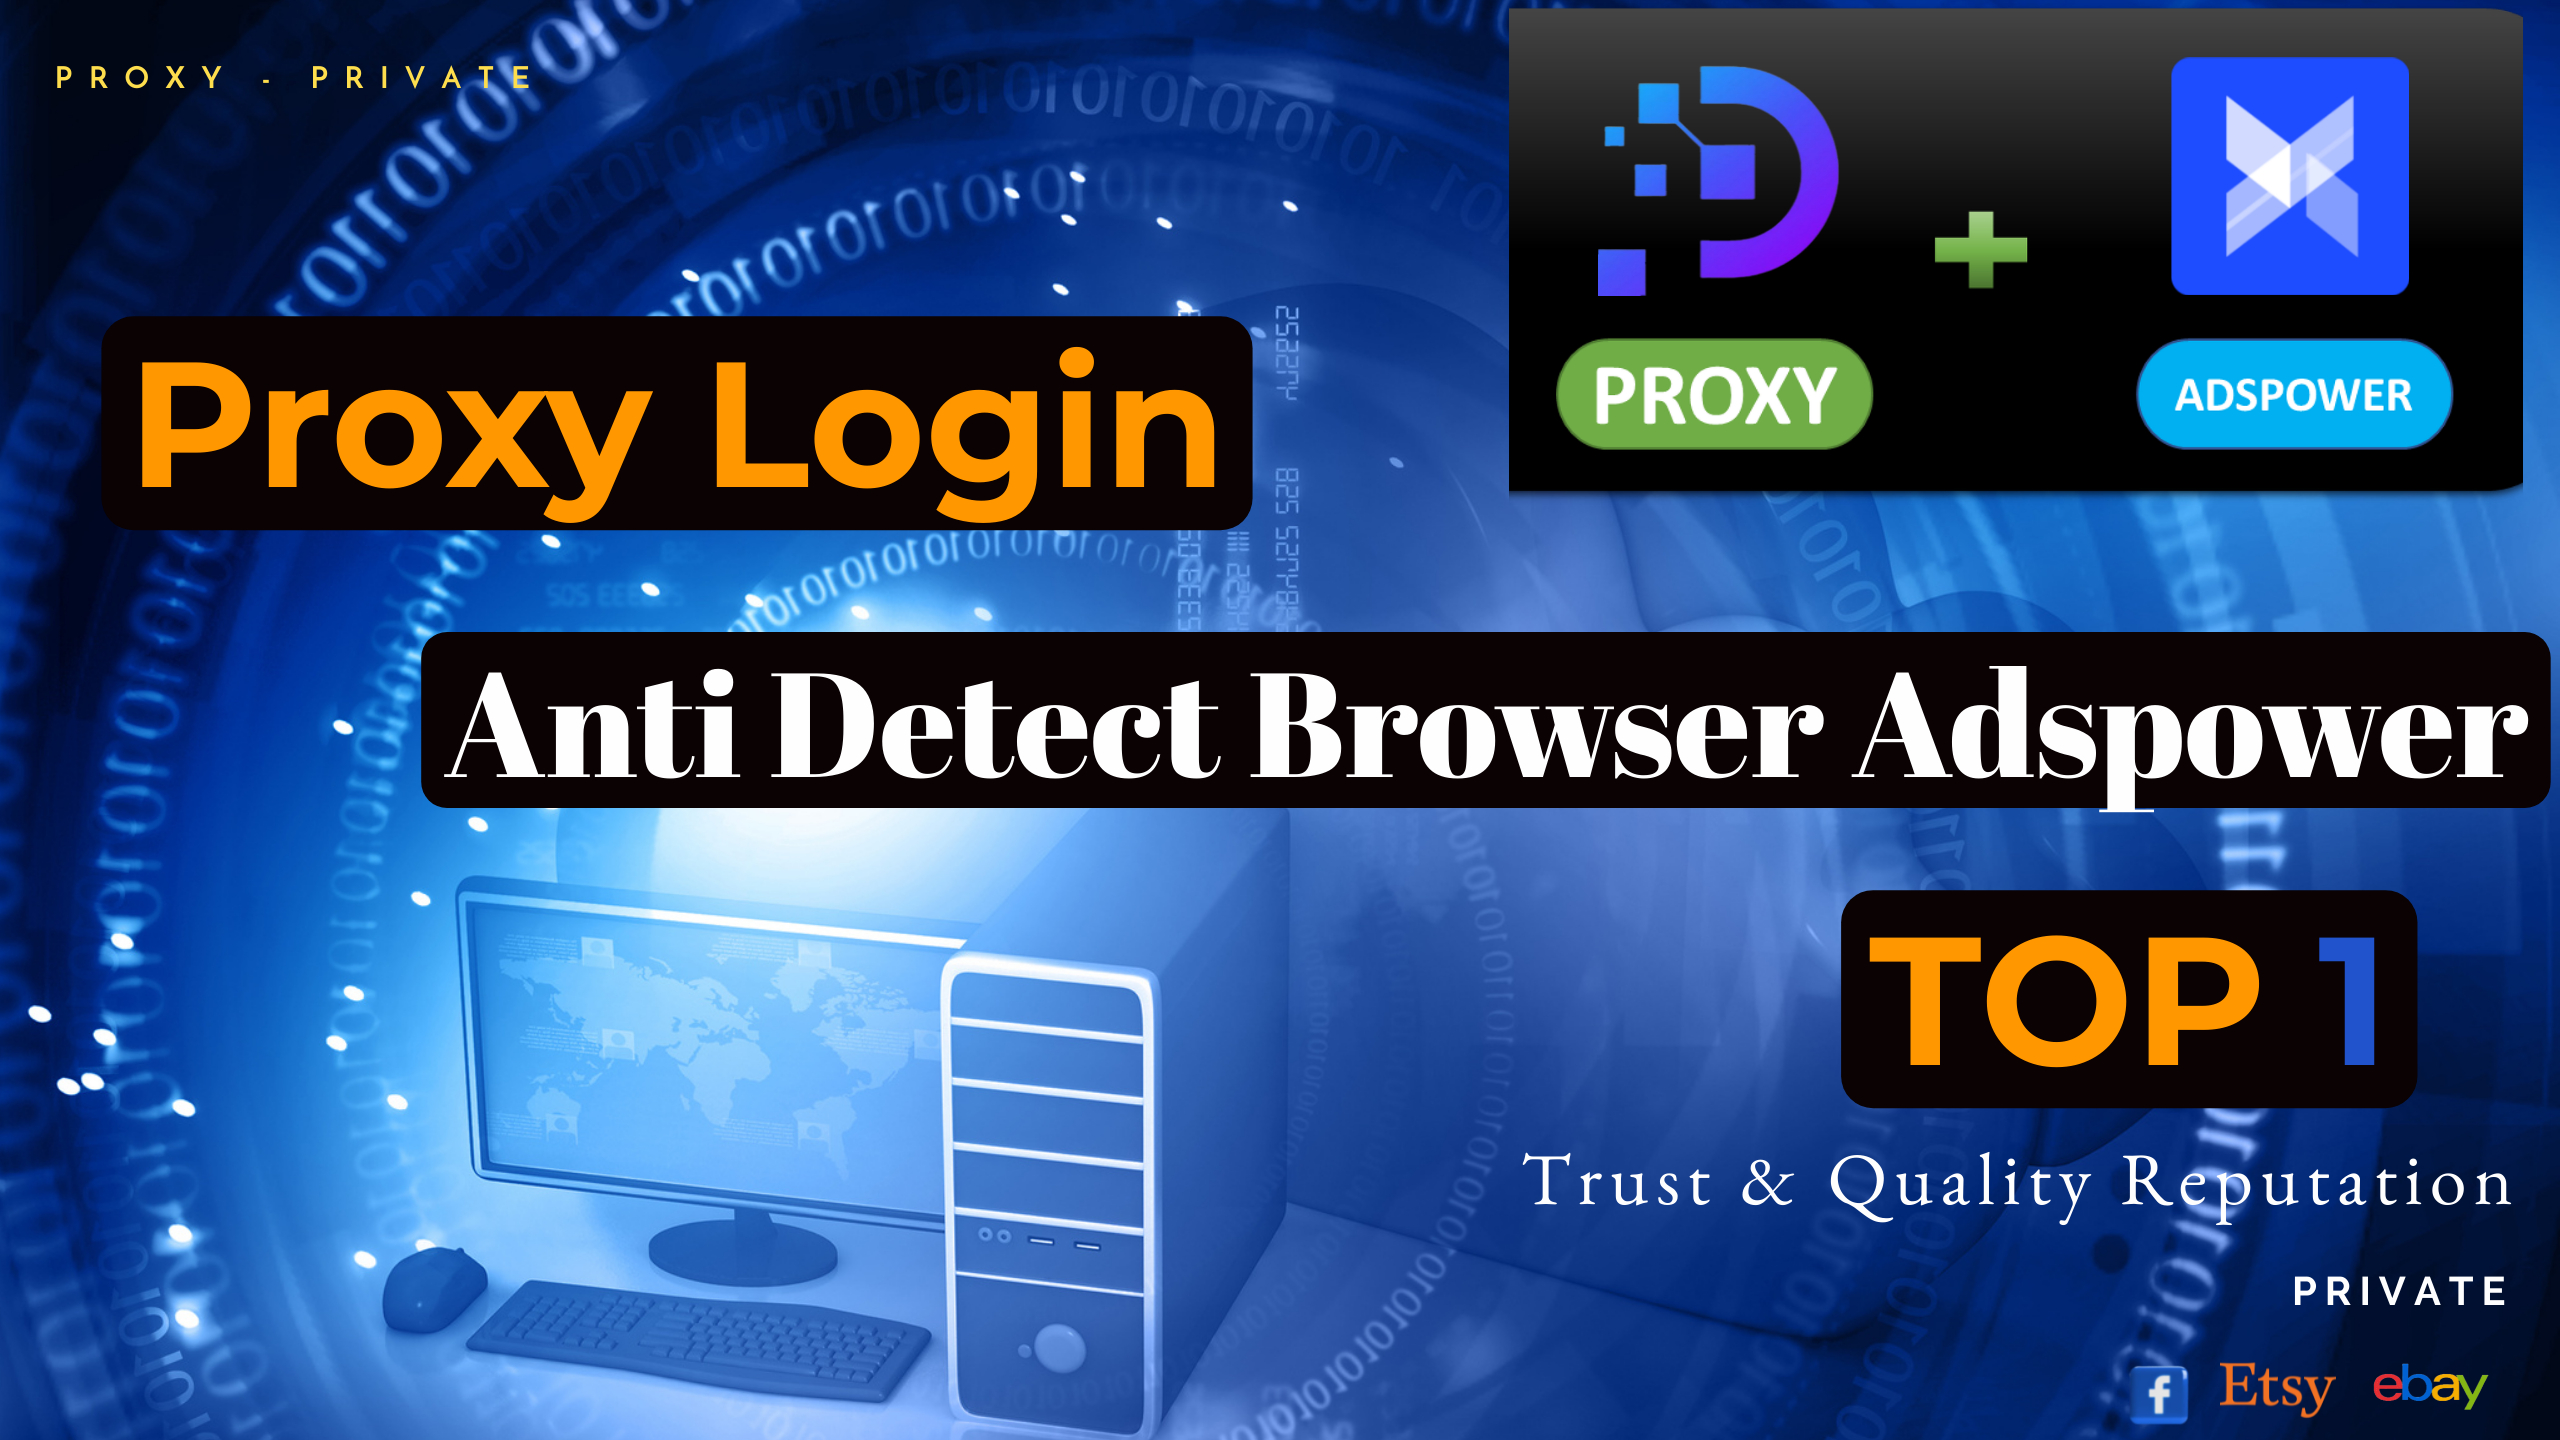 Proxy Login to Anti Detect Browser Adspower